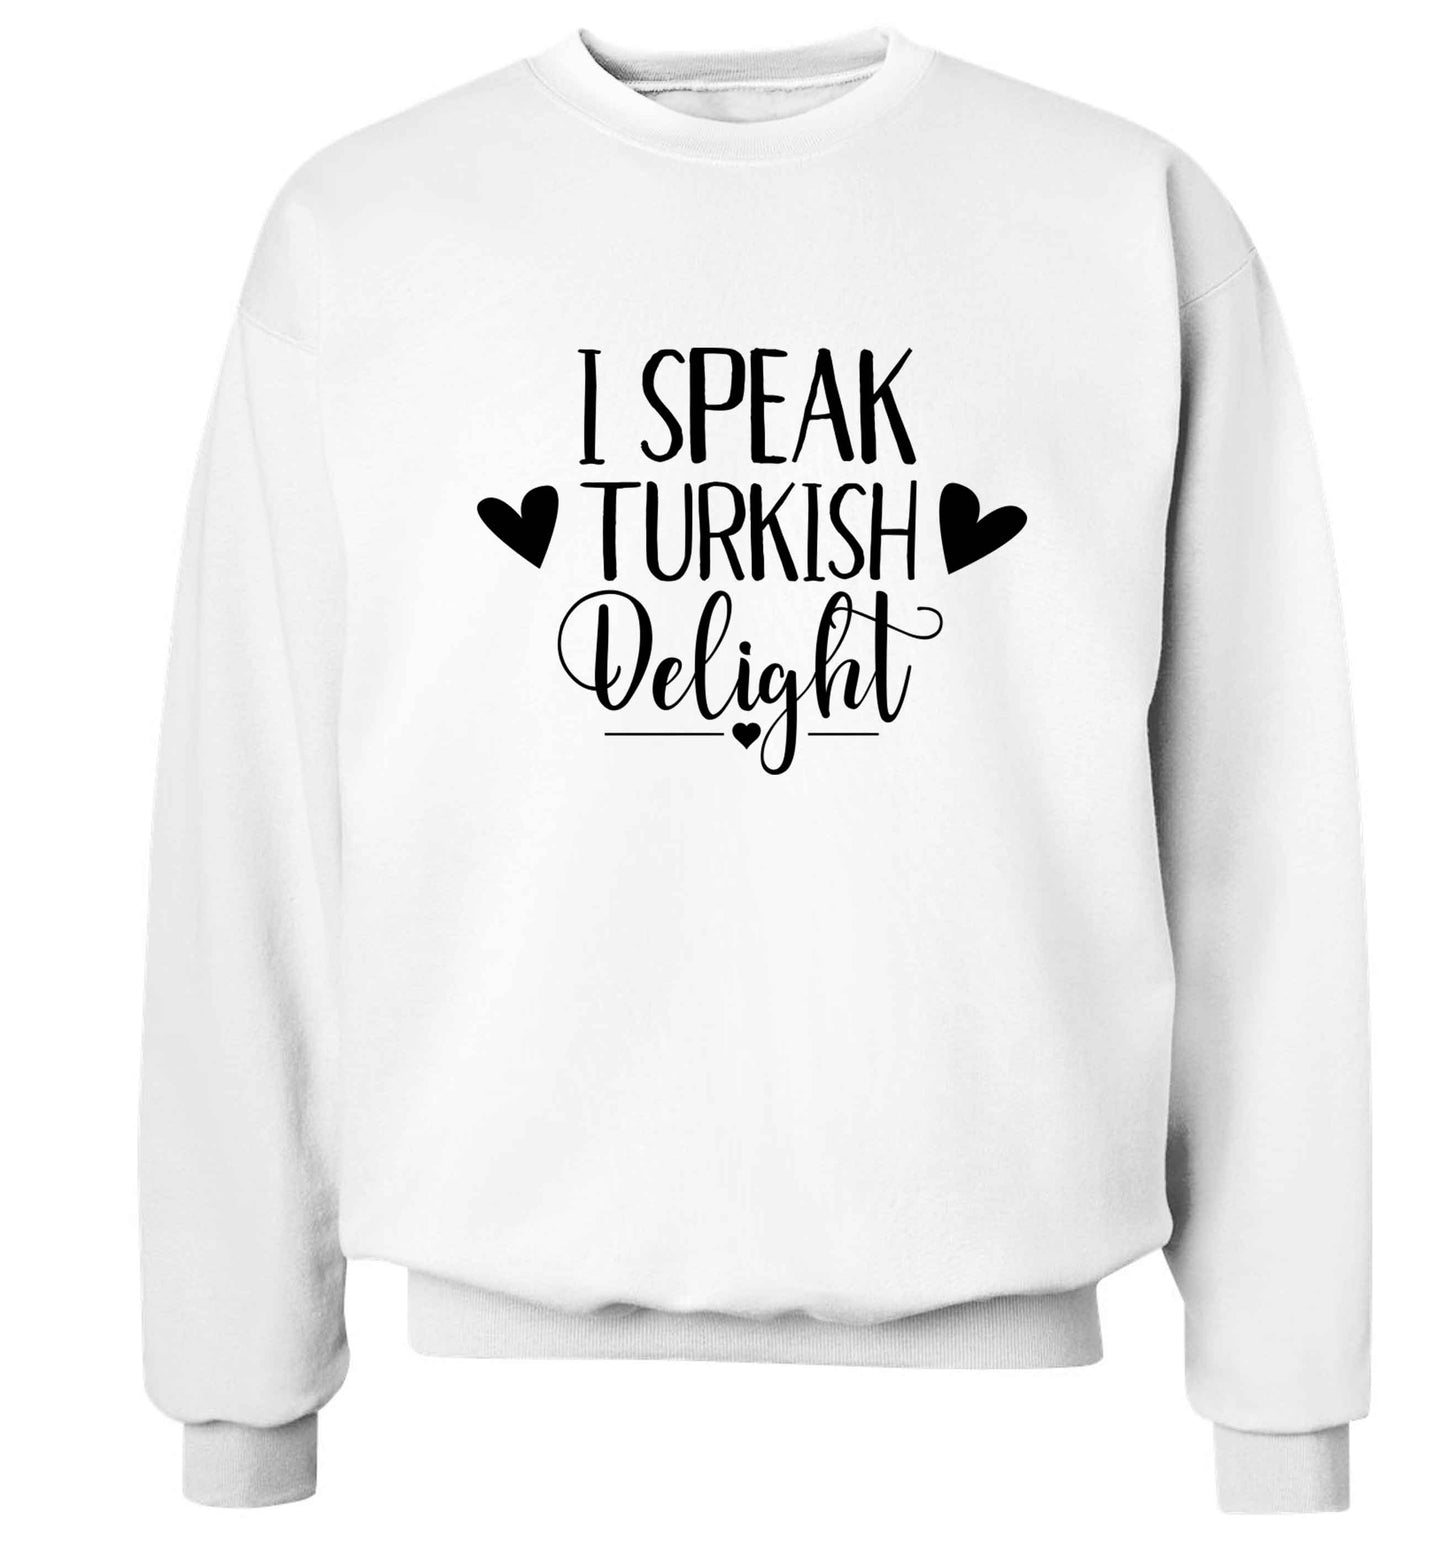 I speak turkish...delight Adult's unisex white Sweater 2XL